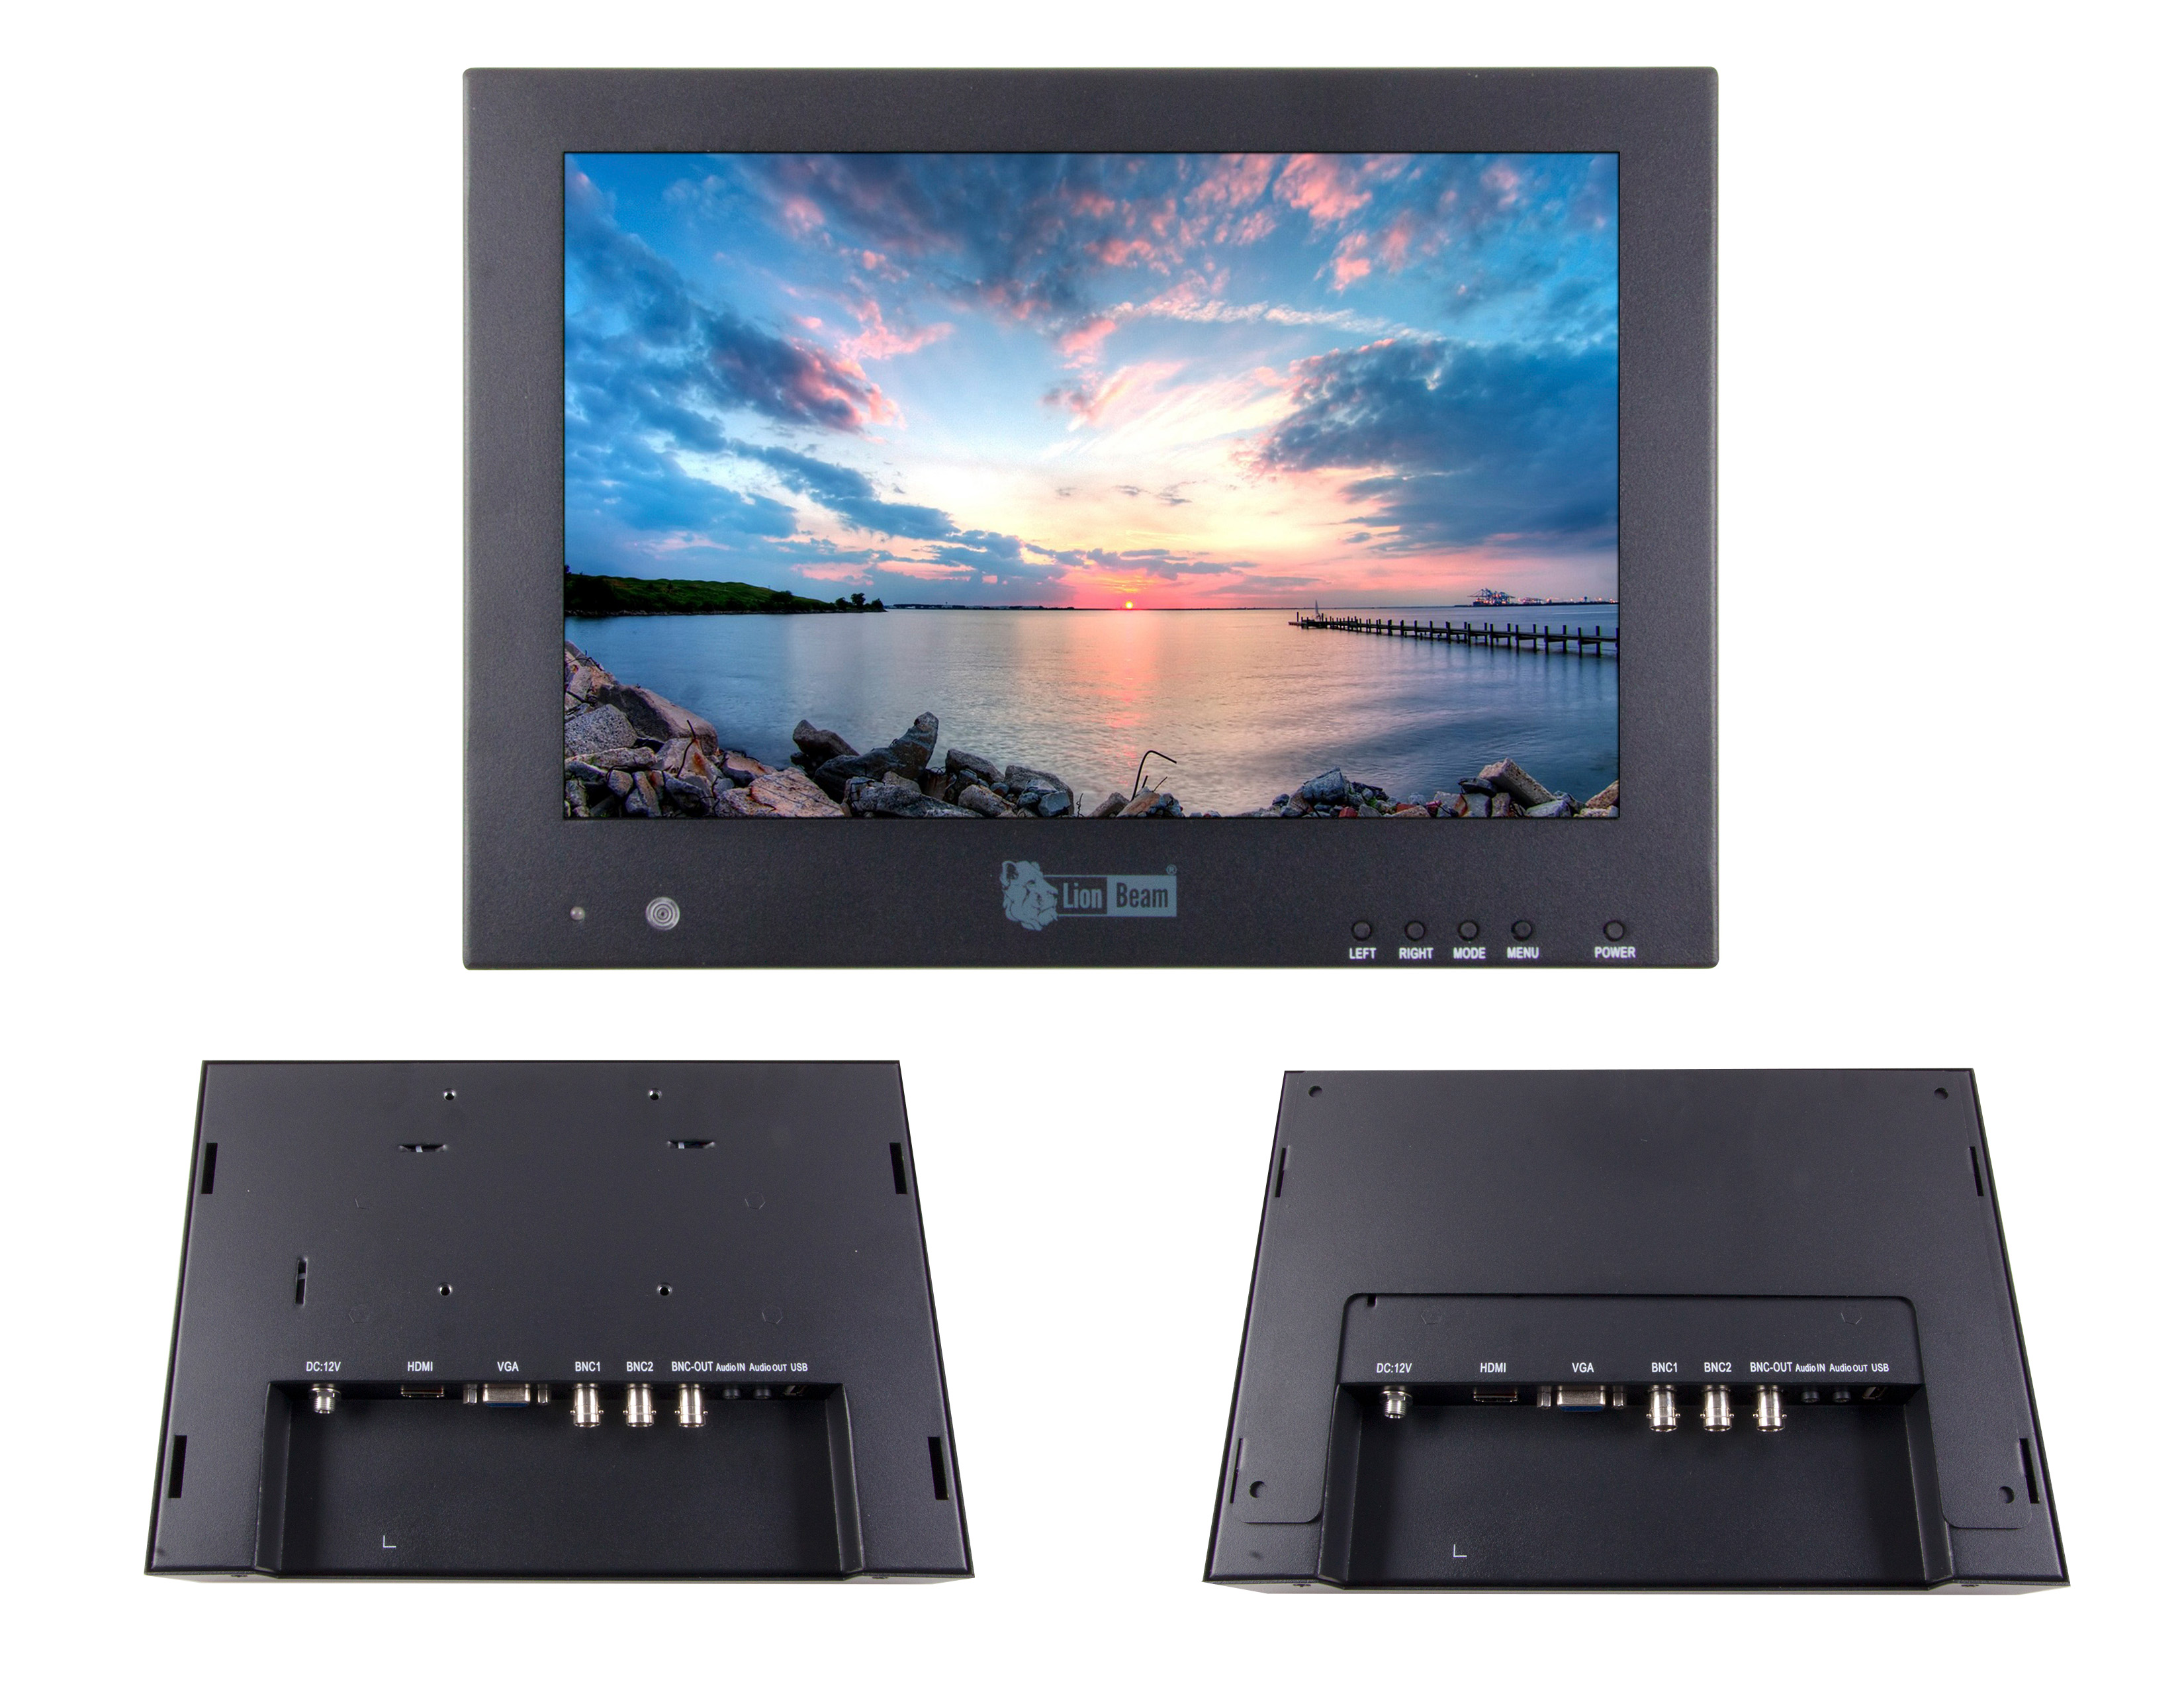 LIONBEAM | Monitor 10&quot; LED
Surface Black HDMI,VGA,BNC
W/Remote Control